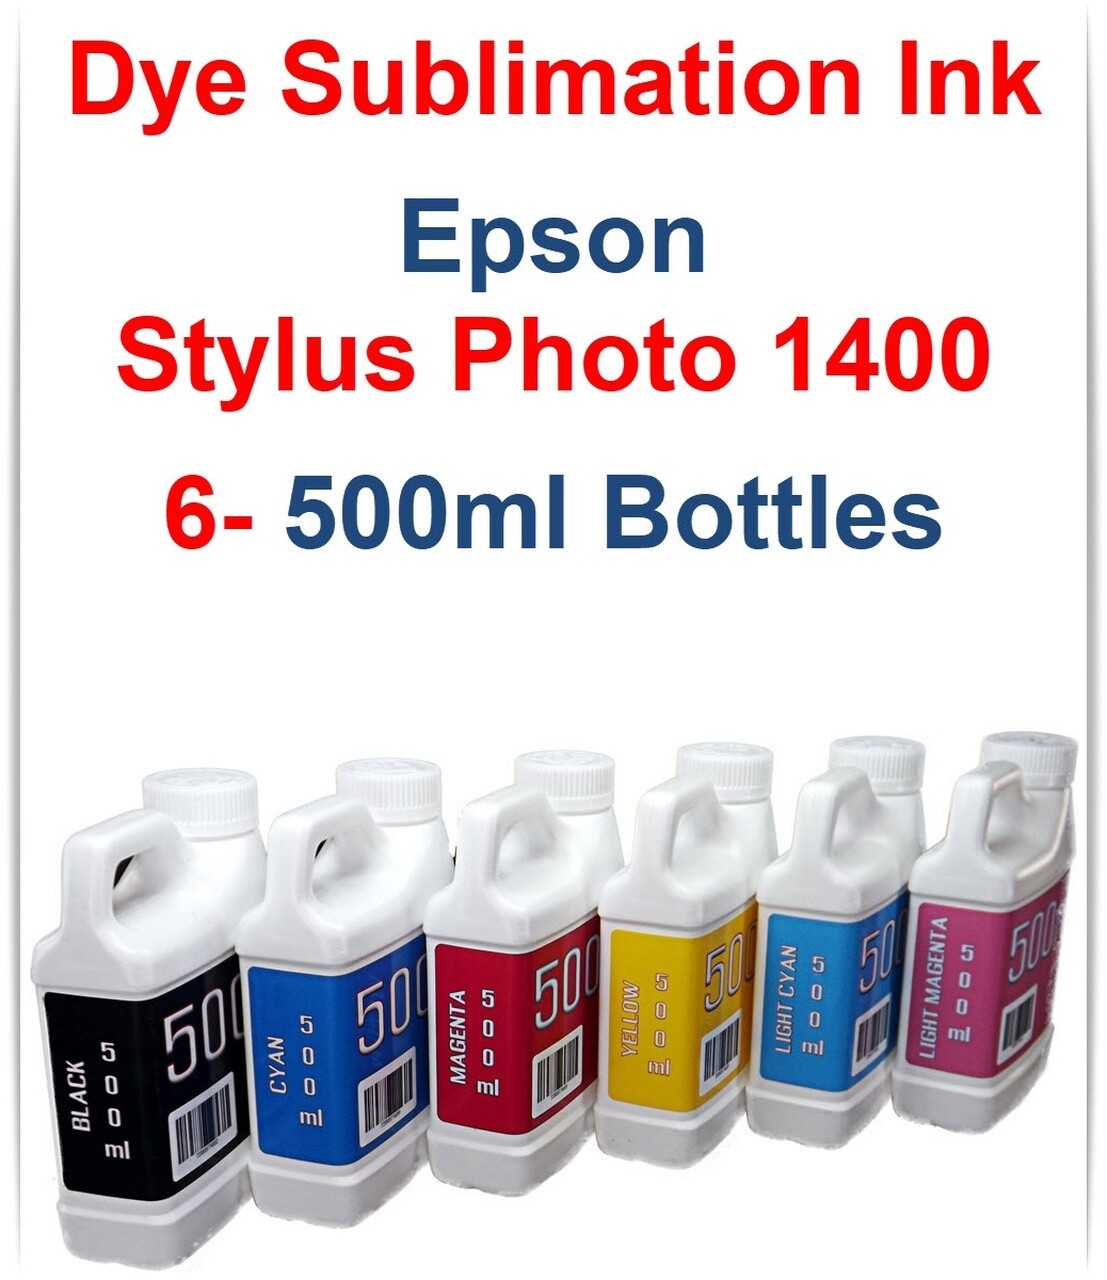 Dye Sublimation Ink 6- 500ml bottles for Epson Stylus Photo 1400 Printer